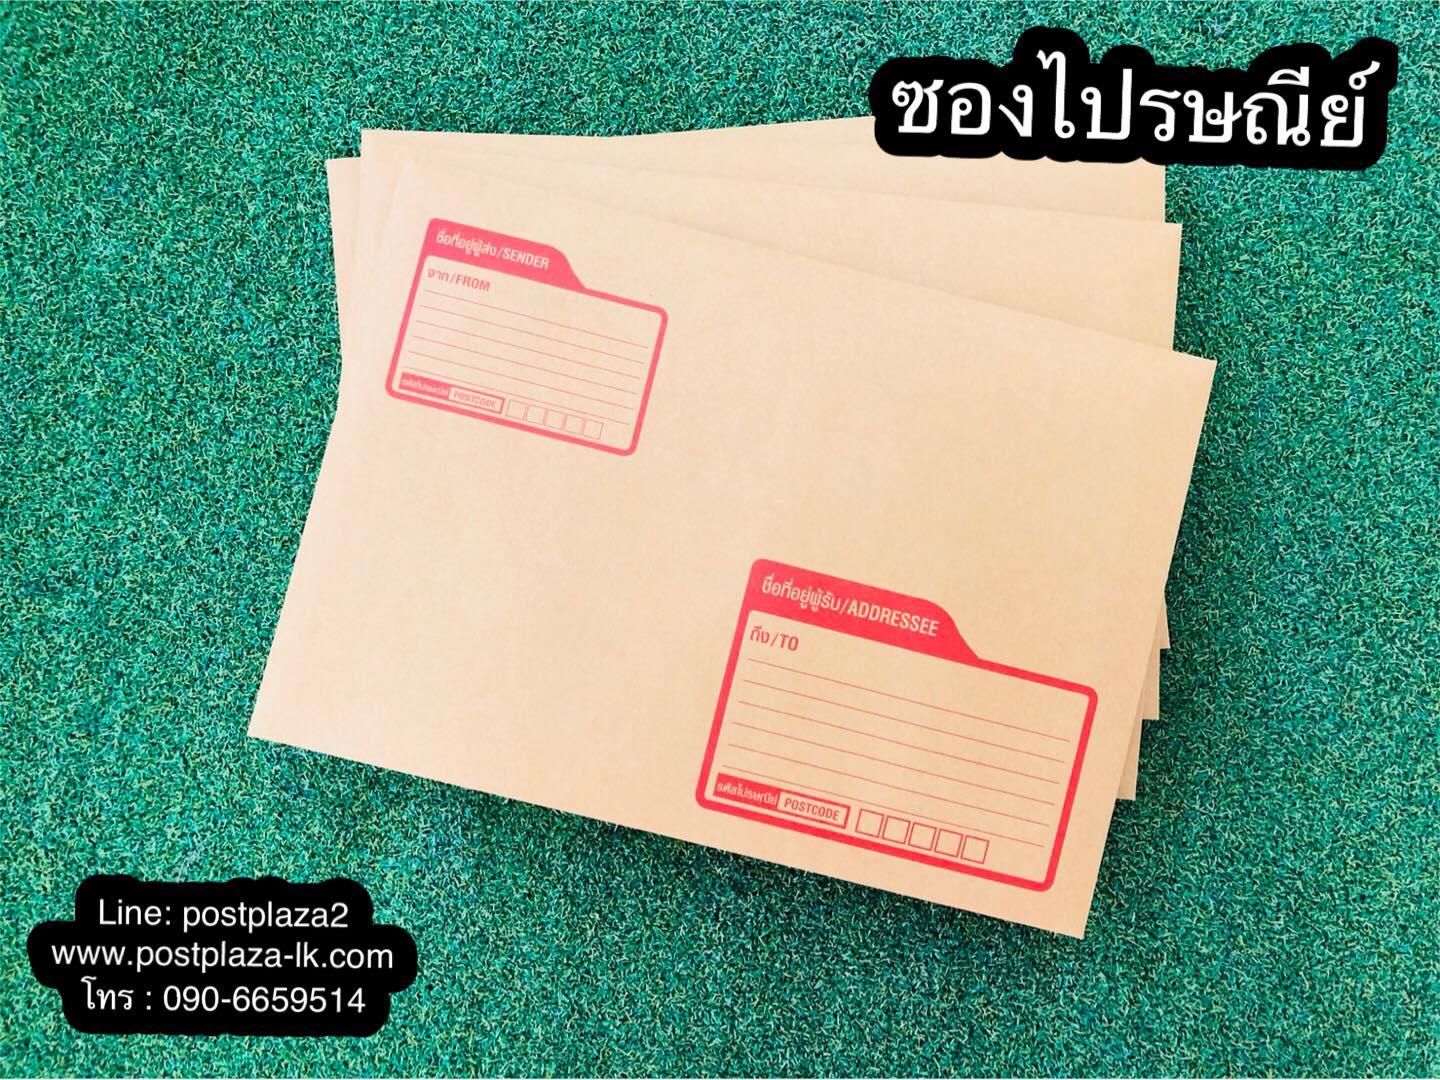 BEBOXES ซองจดหมาย ซองไปรษณีย์สีน้ำตาลขนาด 9x12.75 นิ้ว (50 ใบ)